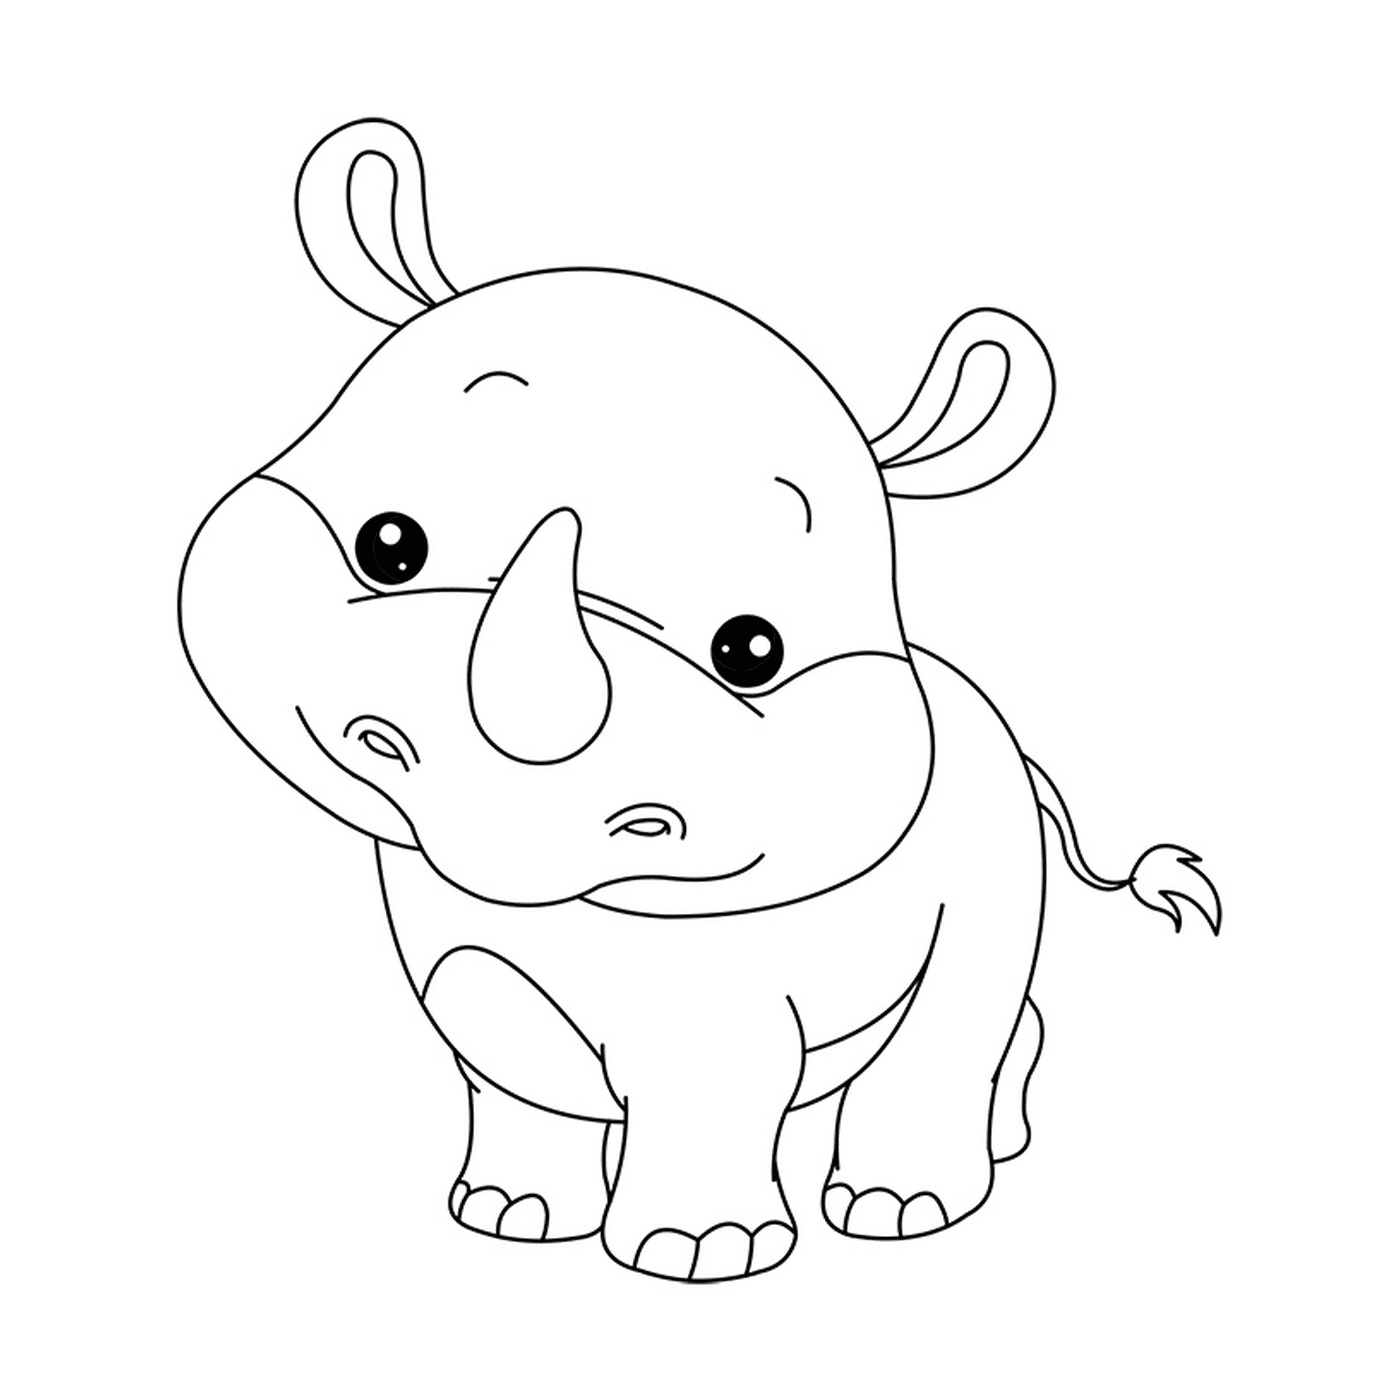   Un rhinocéros bébé regardant la caméra 